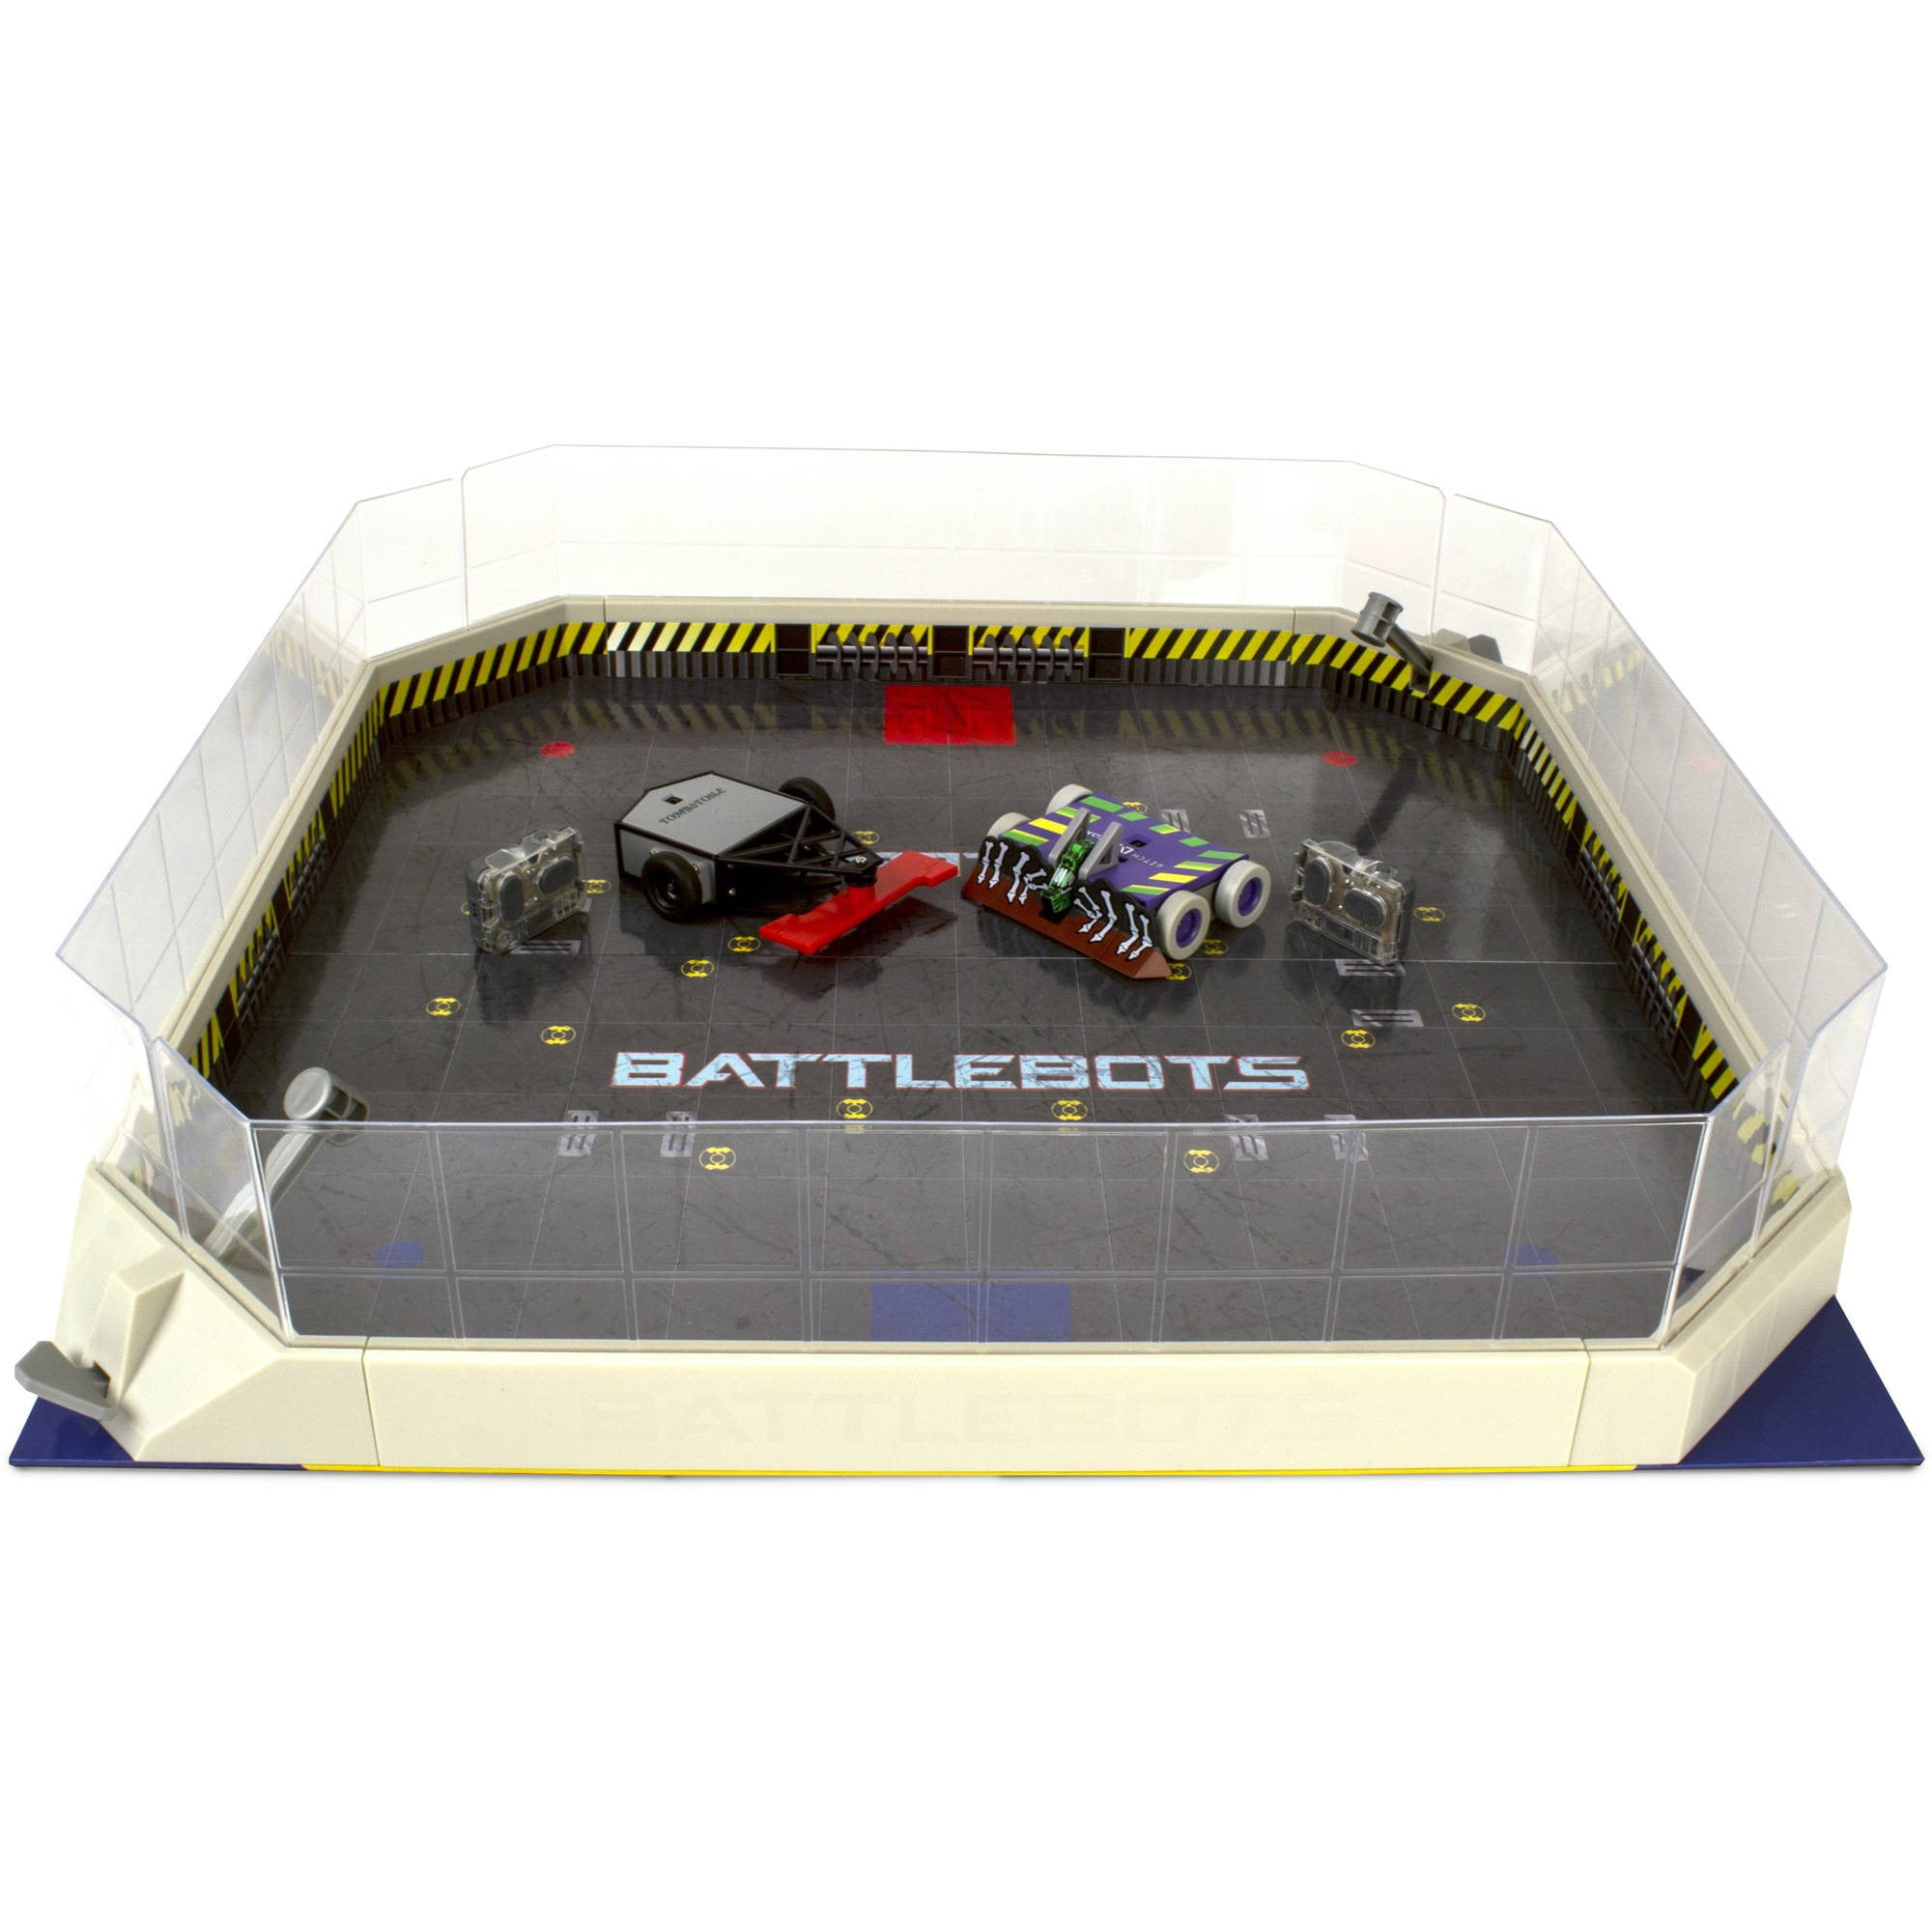 Hexbug Battlebots Arena Playset 